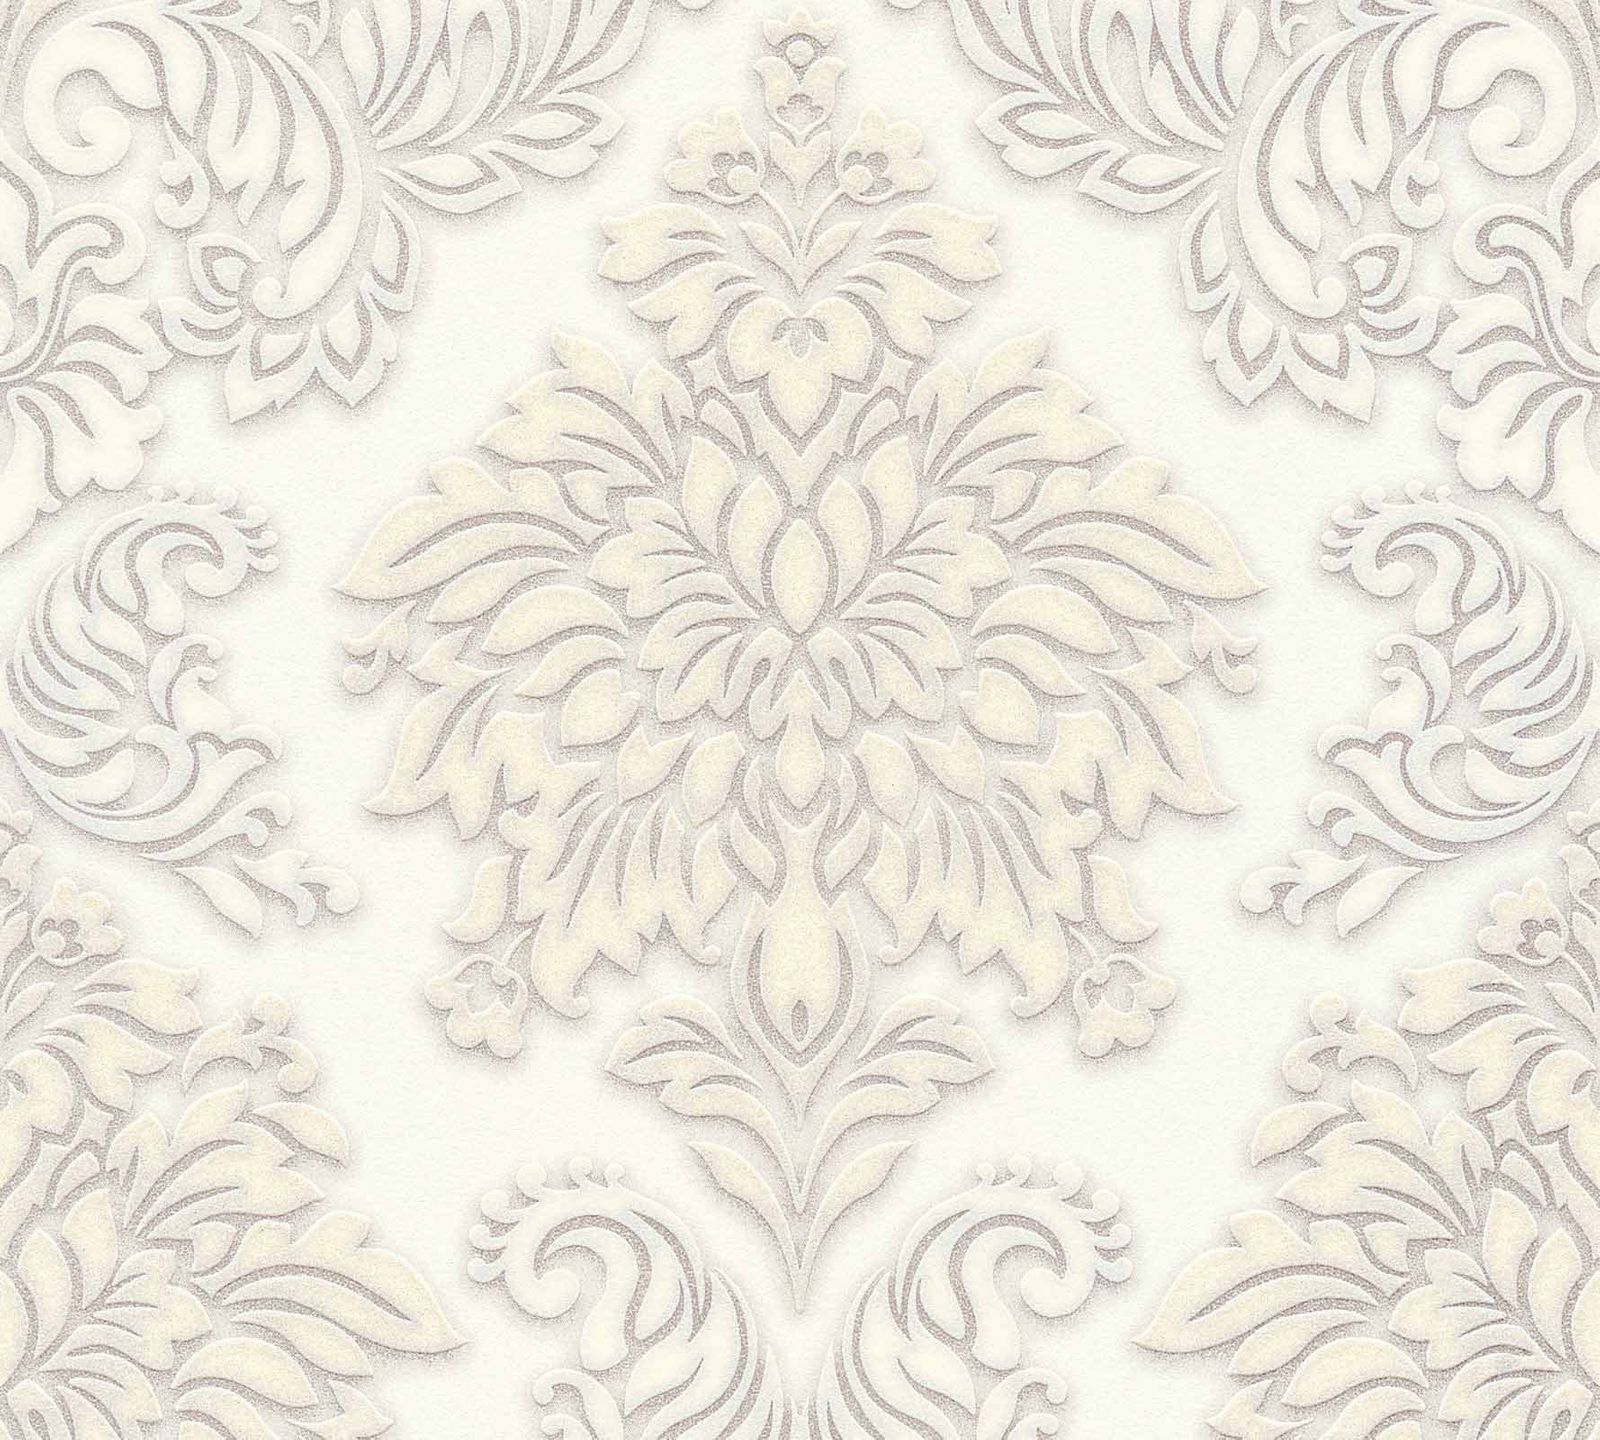 Création Wallpaper Flowers, Beige, Cream, White - Metropolitan Stories 36898 2 - HD Wallpaper 